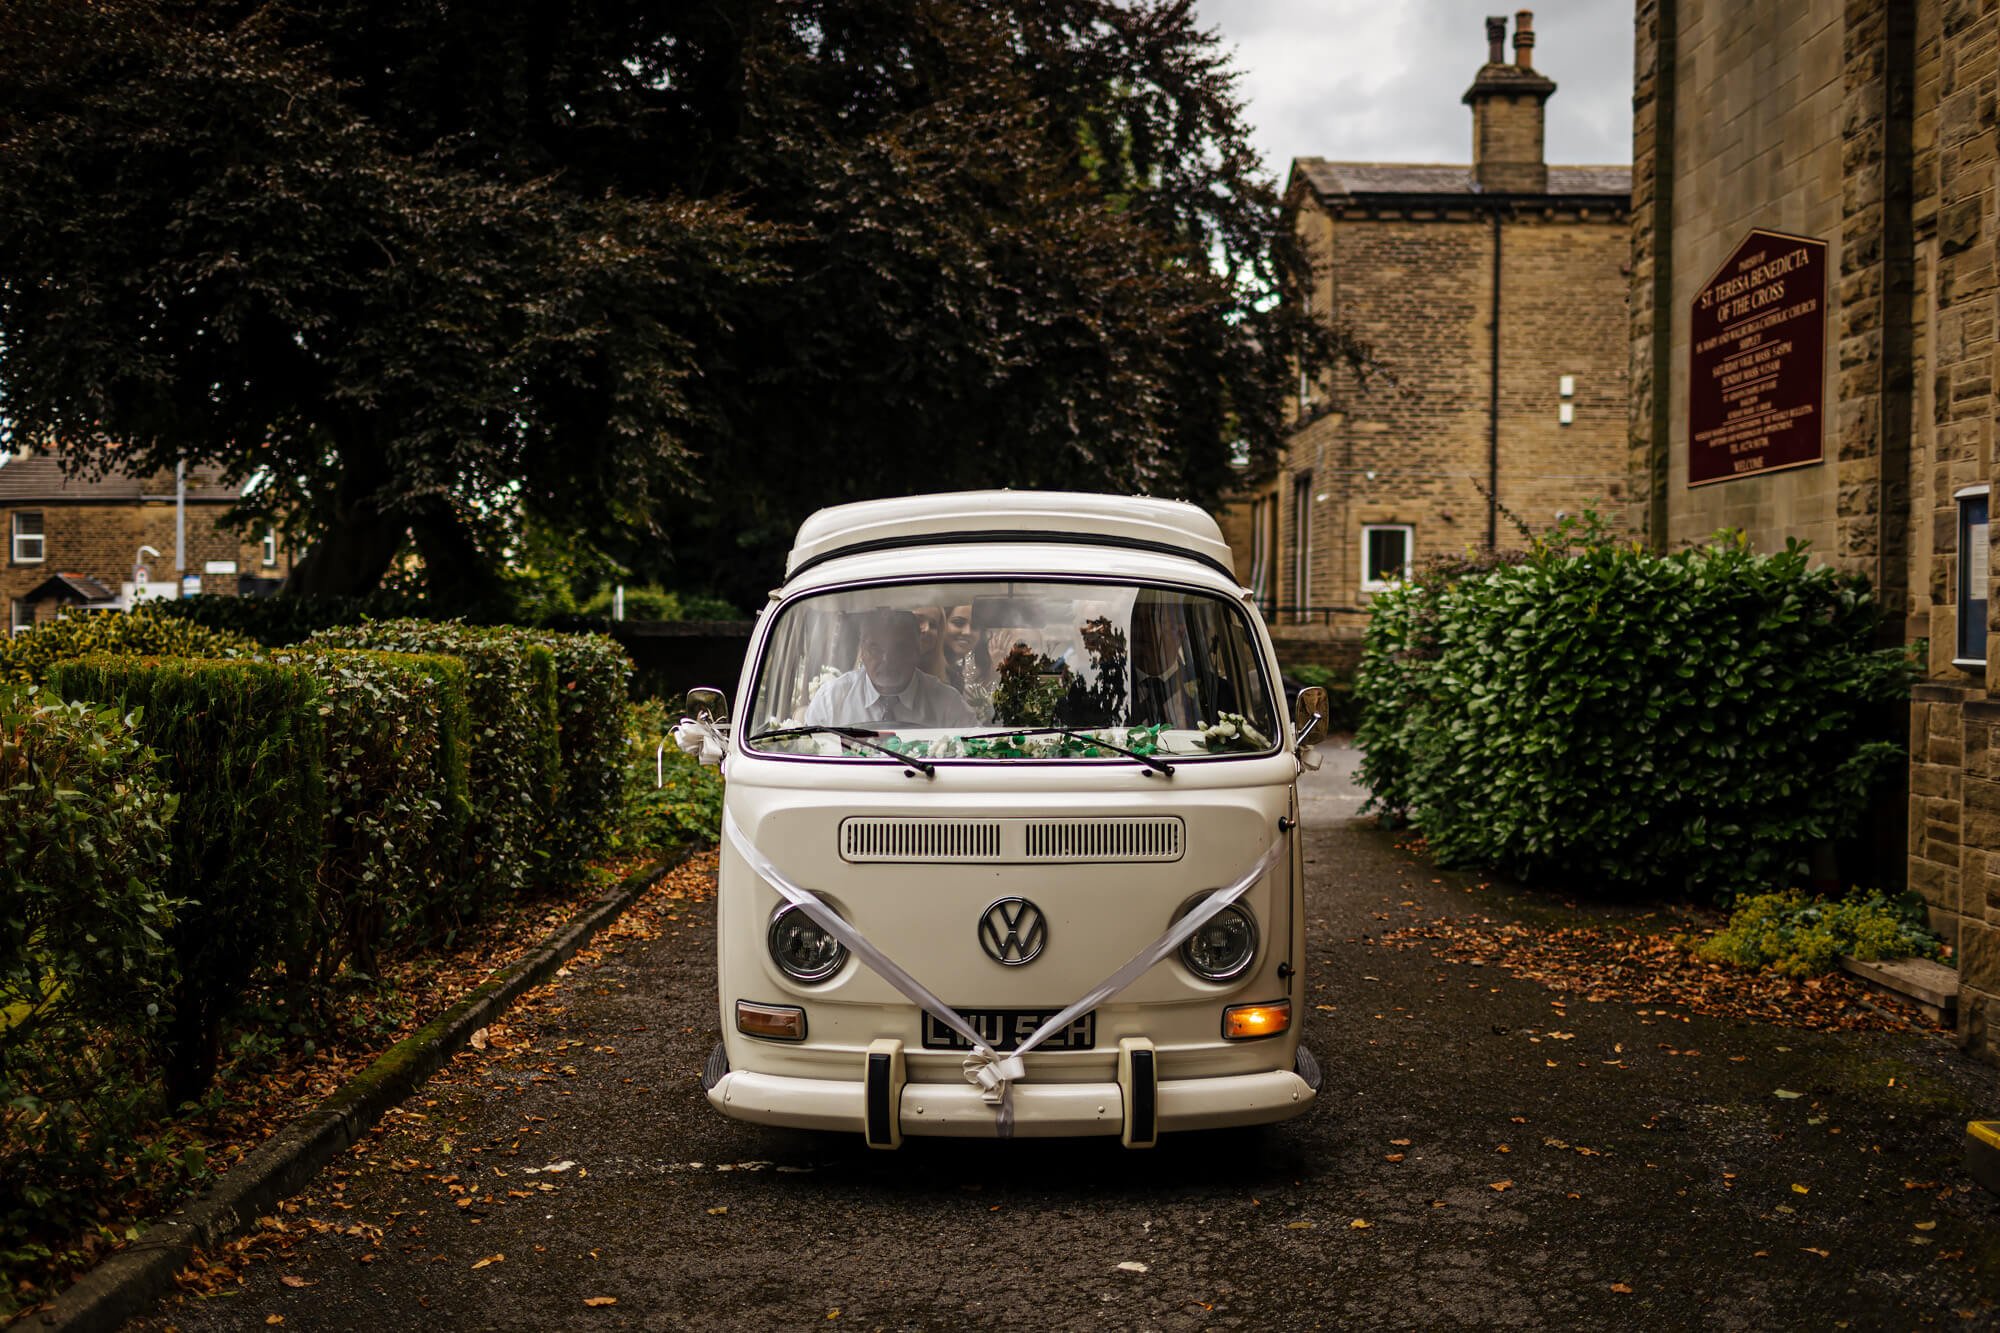 VW campervan arriving at a church wedding